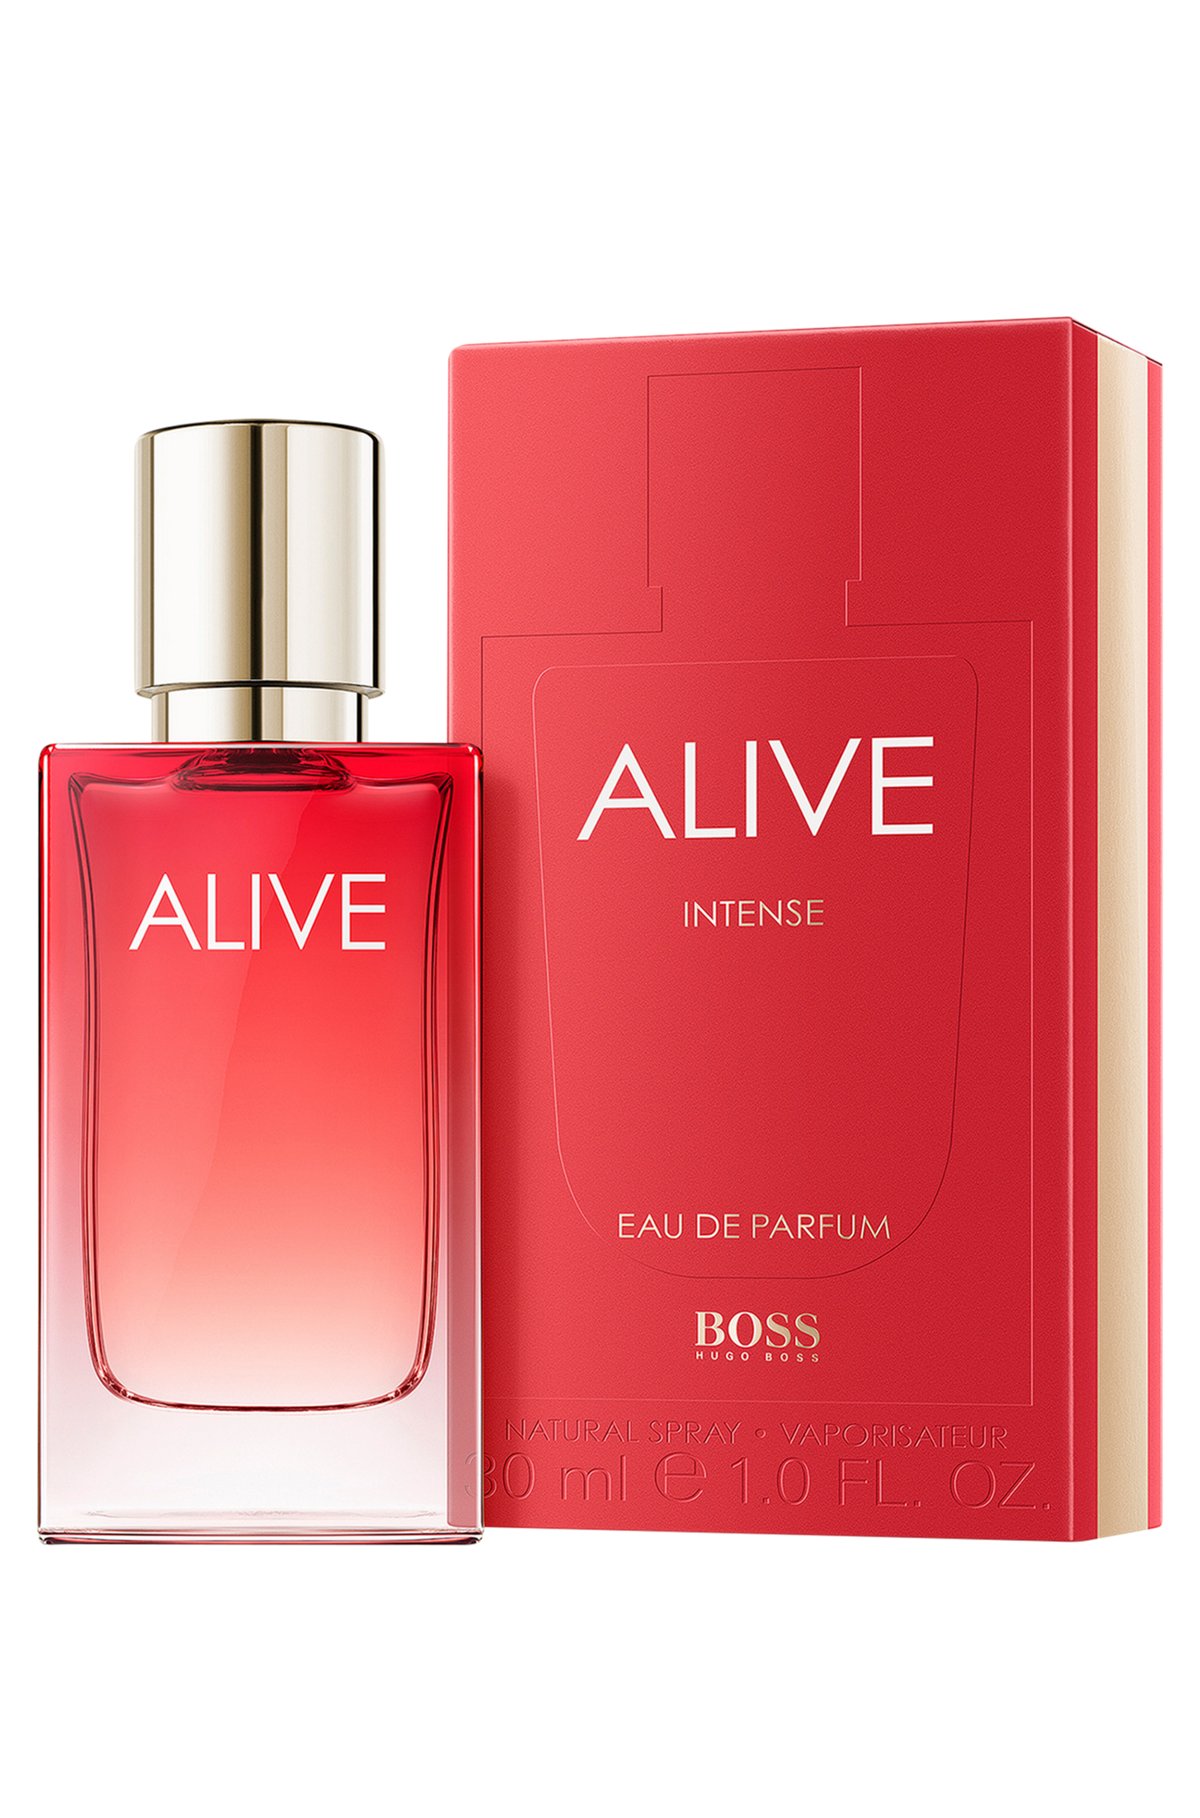 Eau de parfum BOSS Alive Intense, 30 ml, Assorted-Pre-Pack